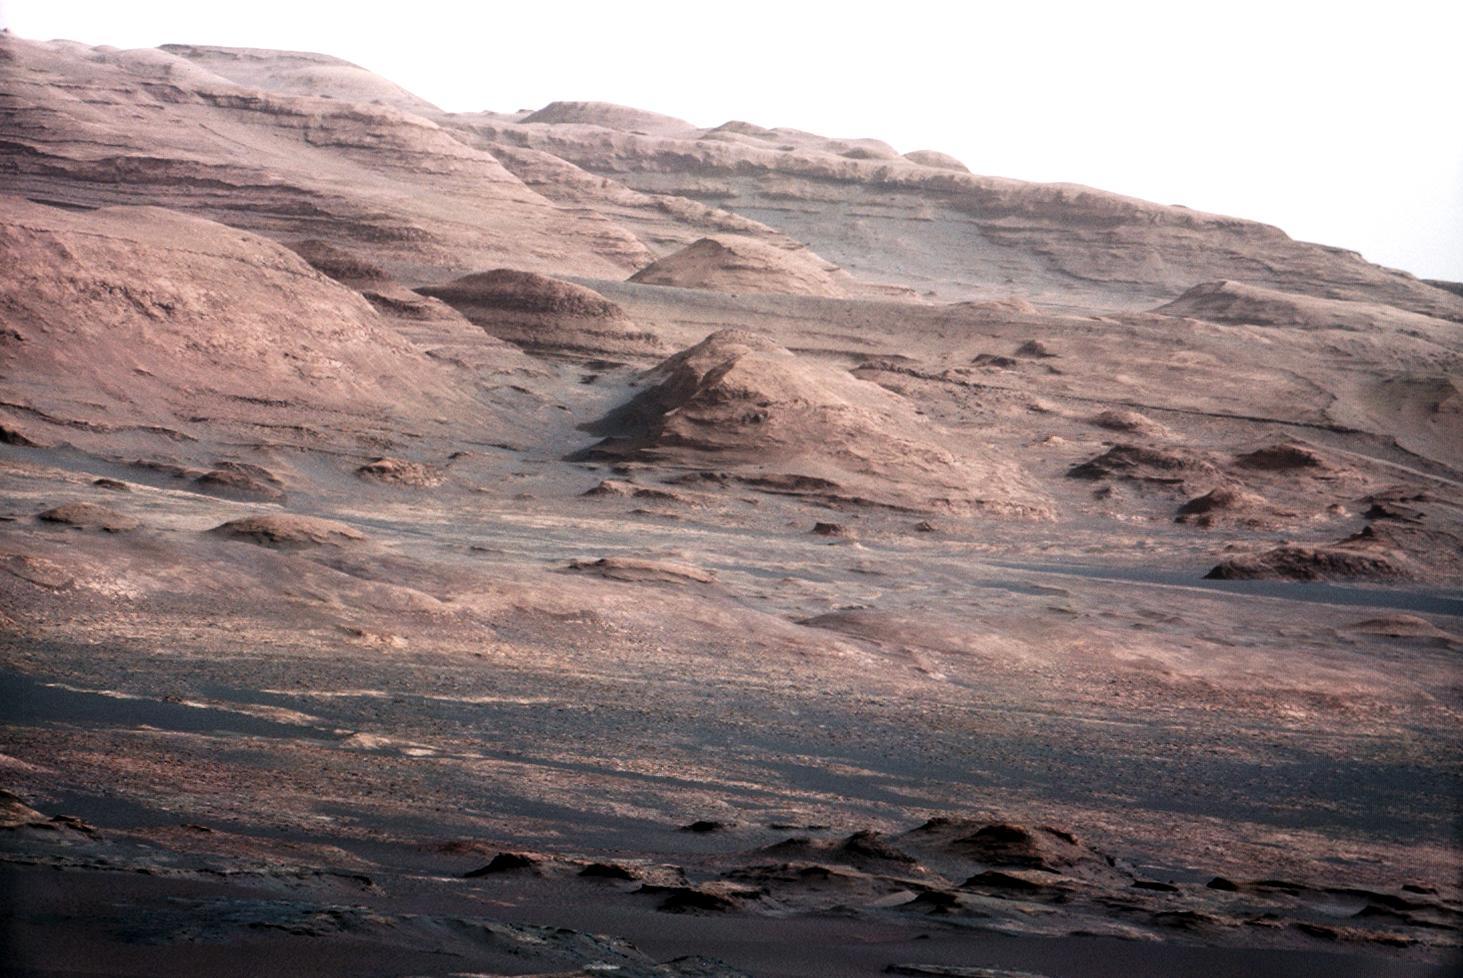 Desktop Wallpaper: Mars as seen